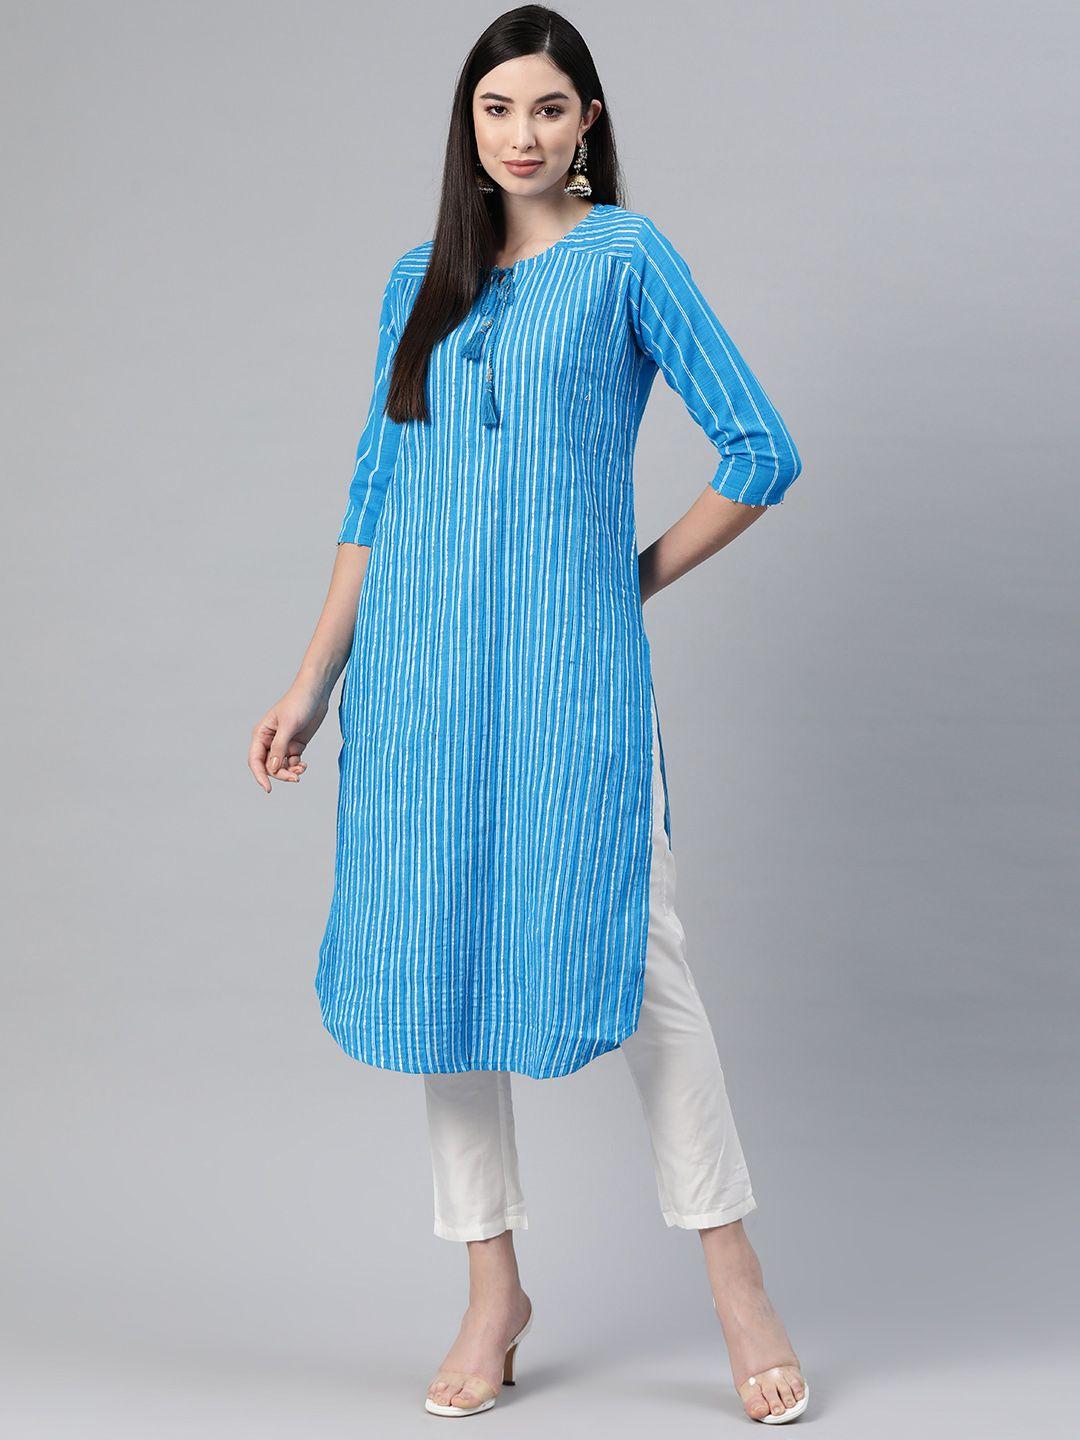 readiprint fashions women striped cotton kurta